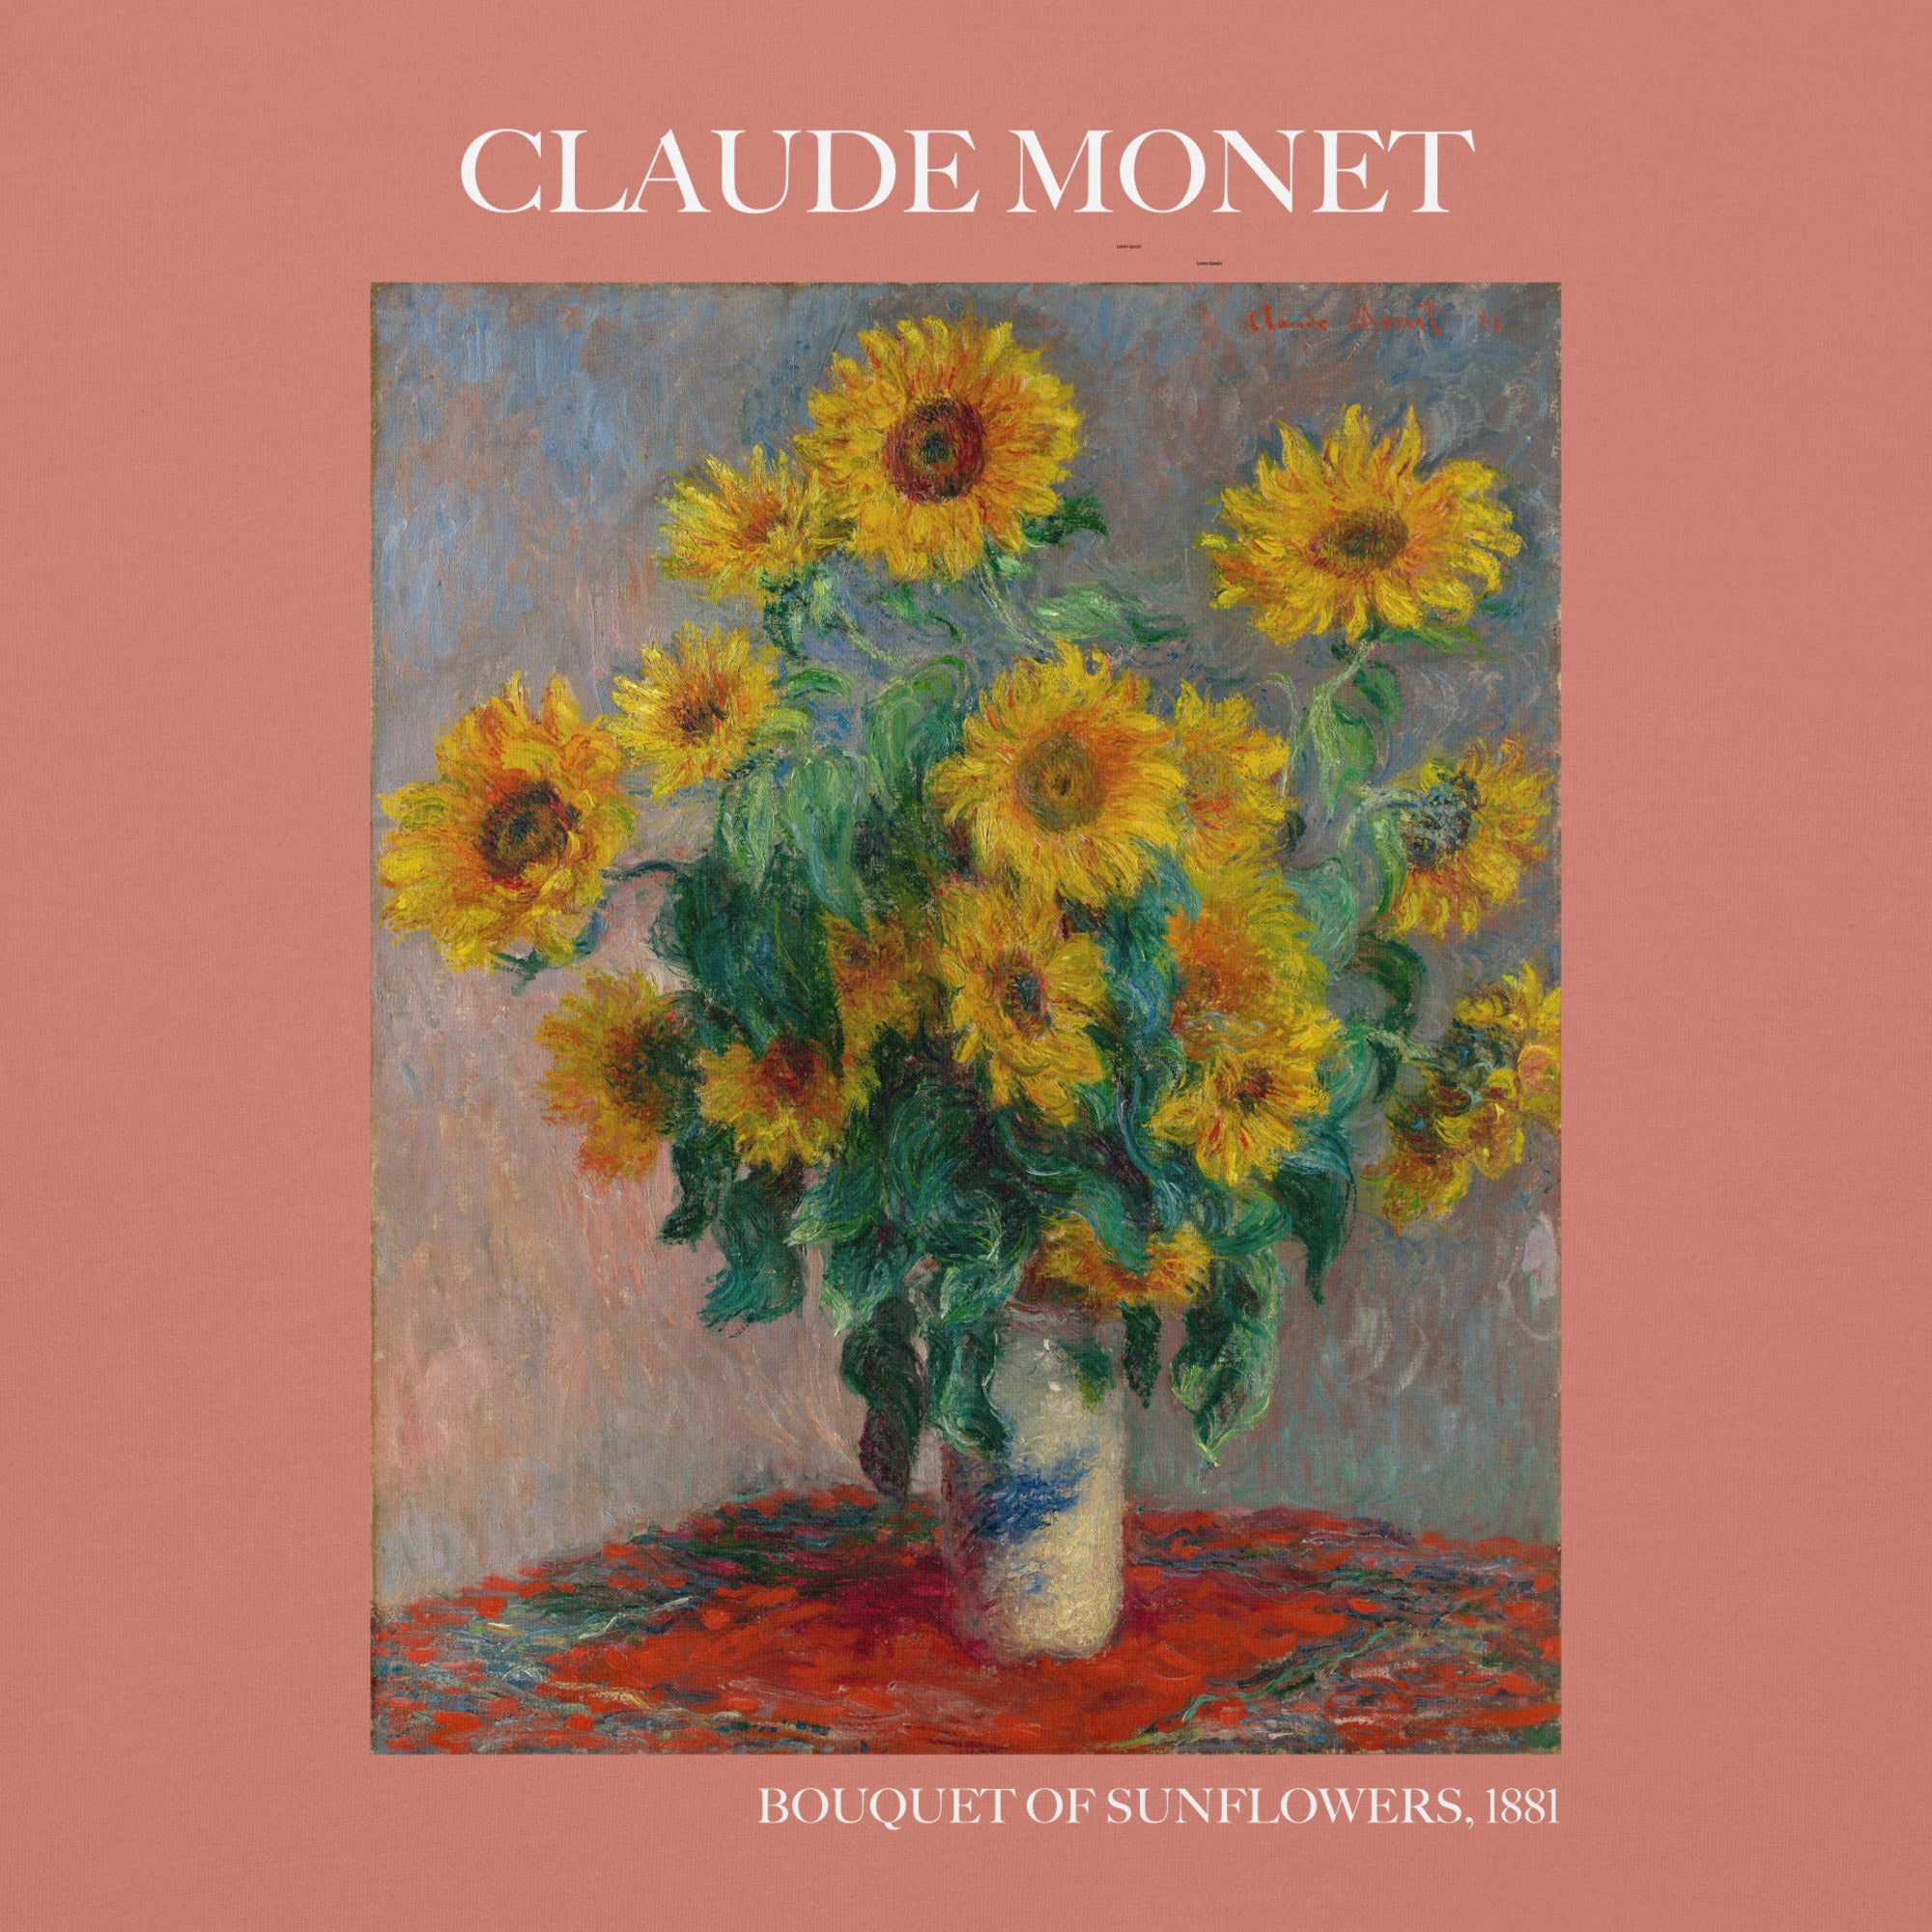 Claude Monet 'Bouquet of Sunflowers' Famous Painting Hoodie | Unisex Premium Art Hoodie